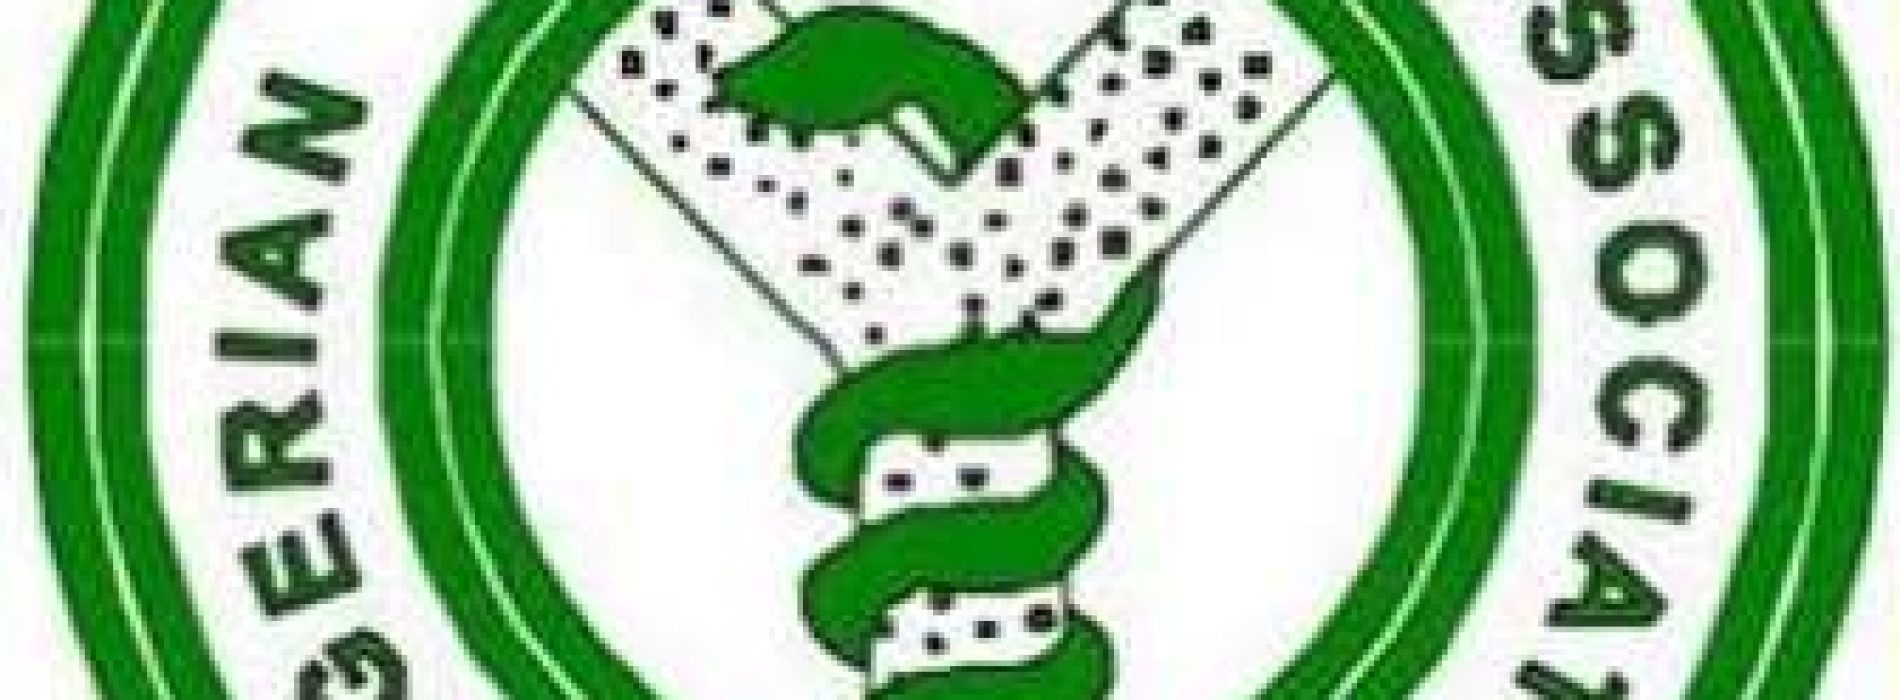 NMA lauds Osinbajo’s confidence in Nigerian healthcare